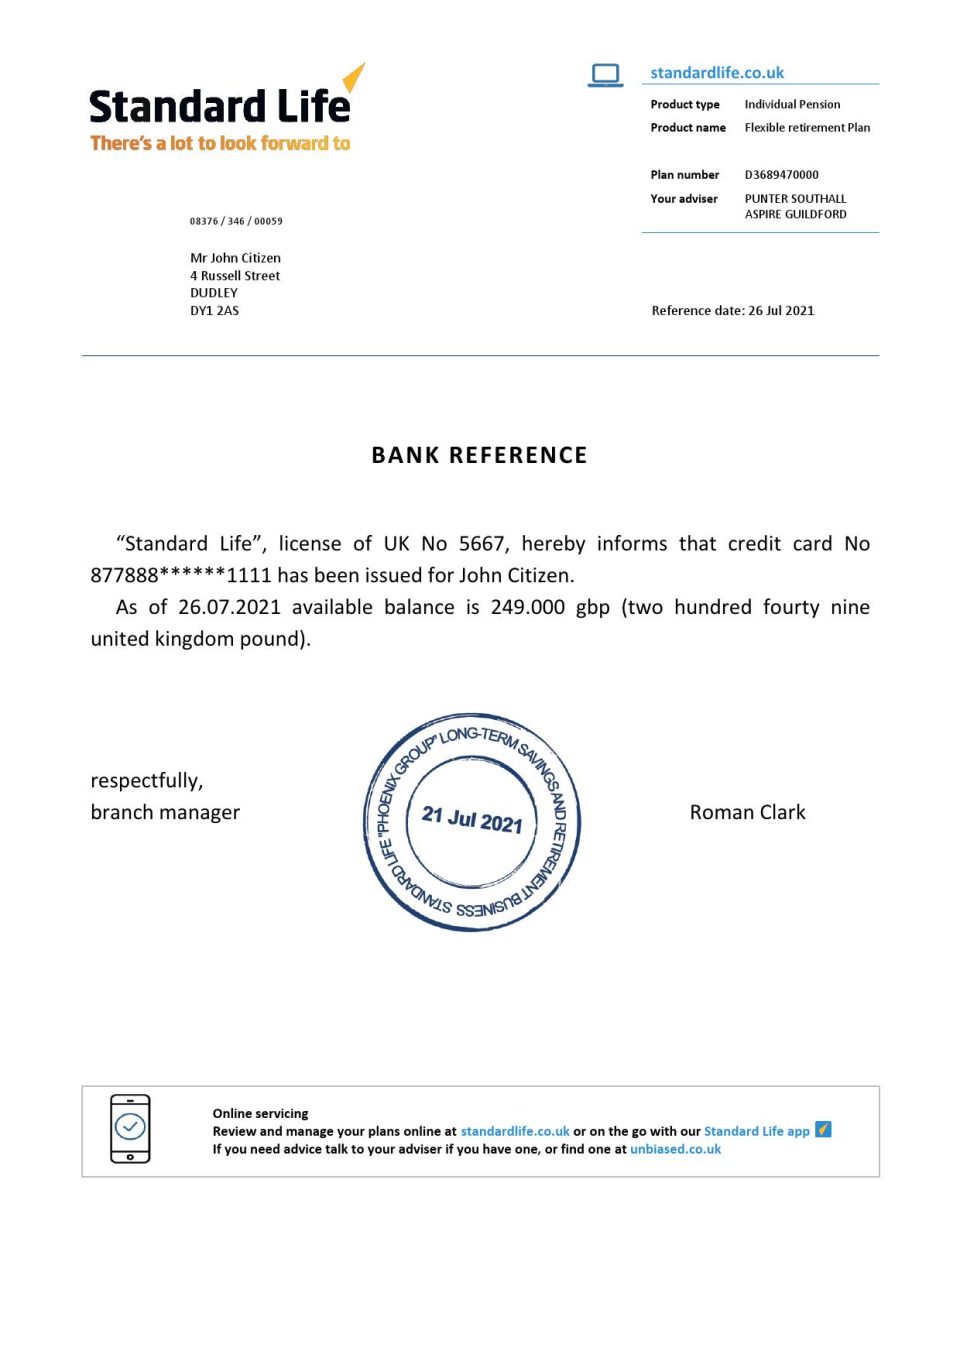 Download United Kingdom Standard Life Bank Reference Letter Templates | Editable Word